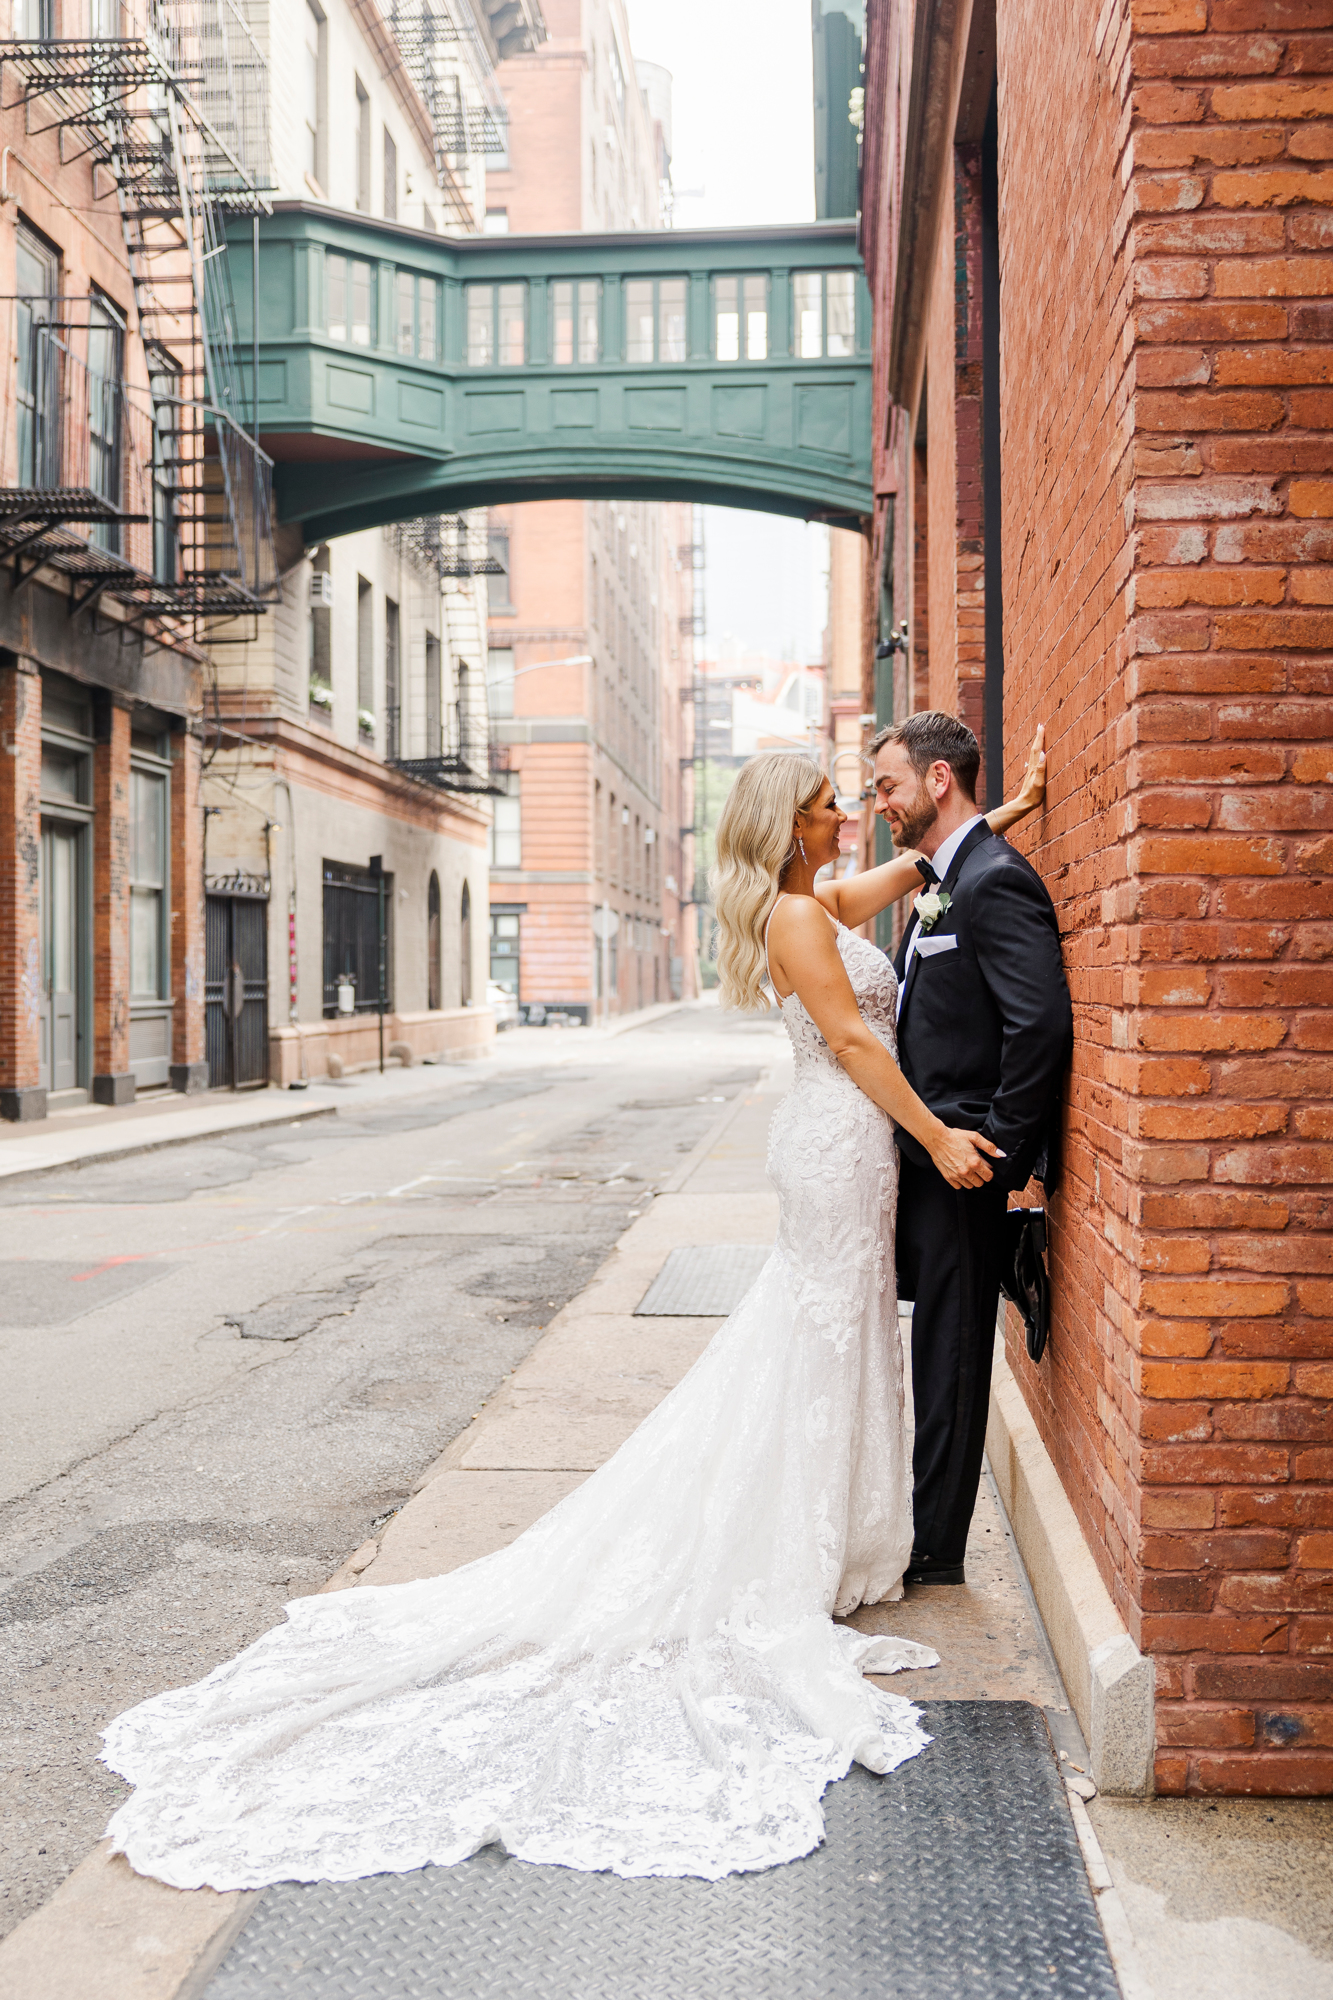 Amazing Photo Gallery of Tribeca Rooftop Wedding